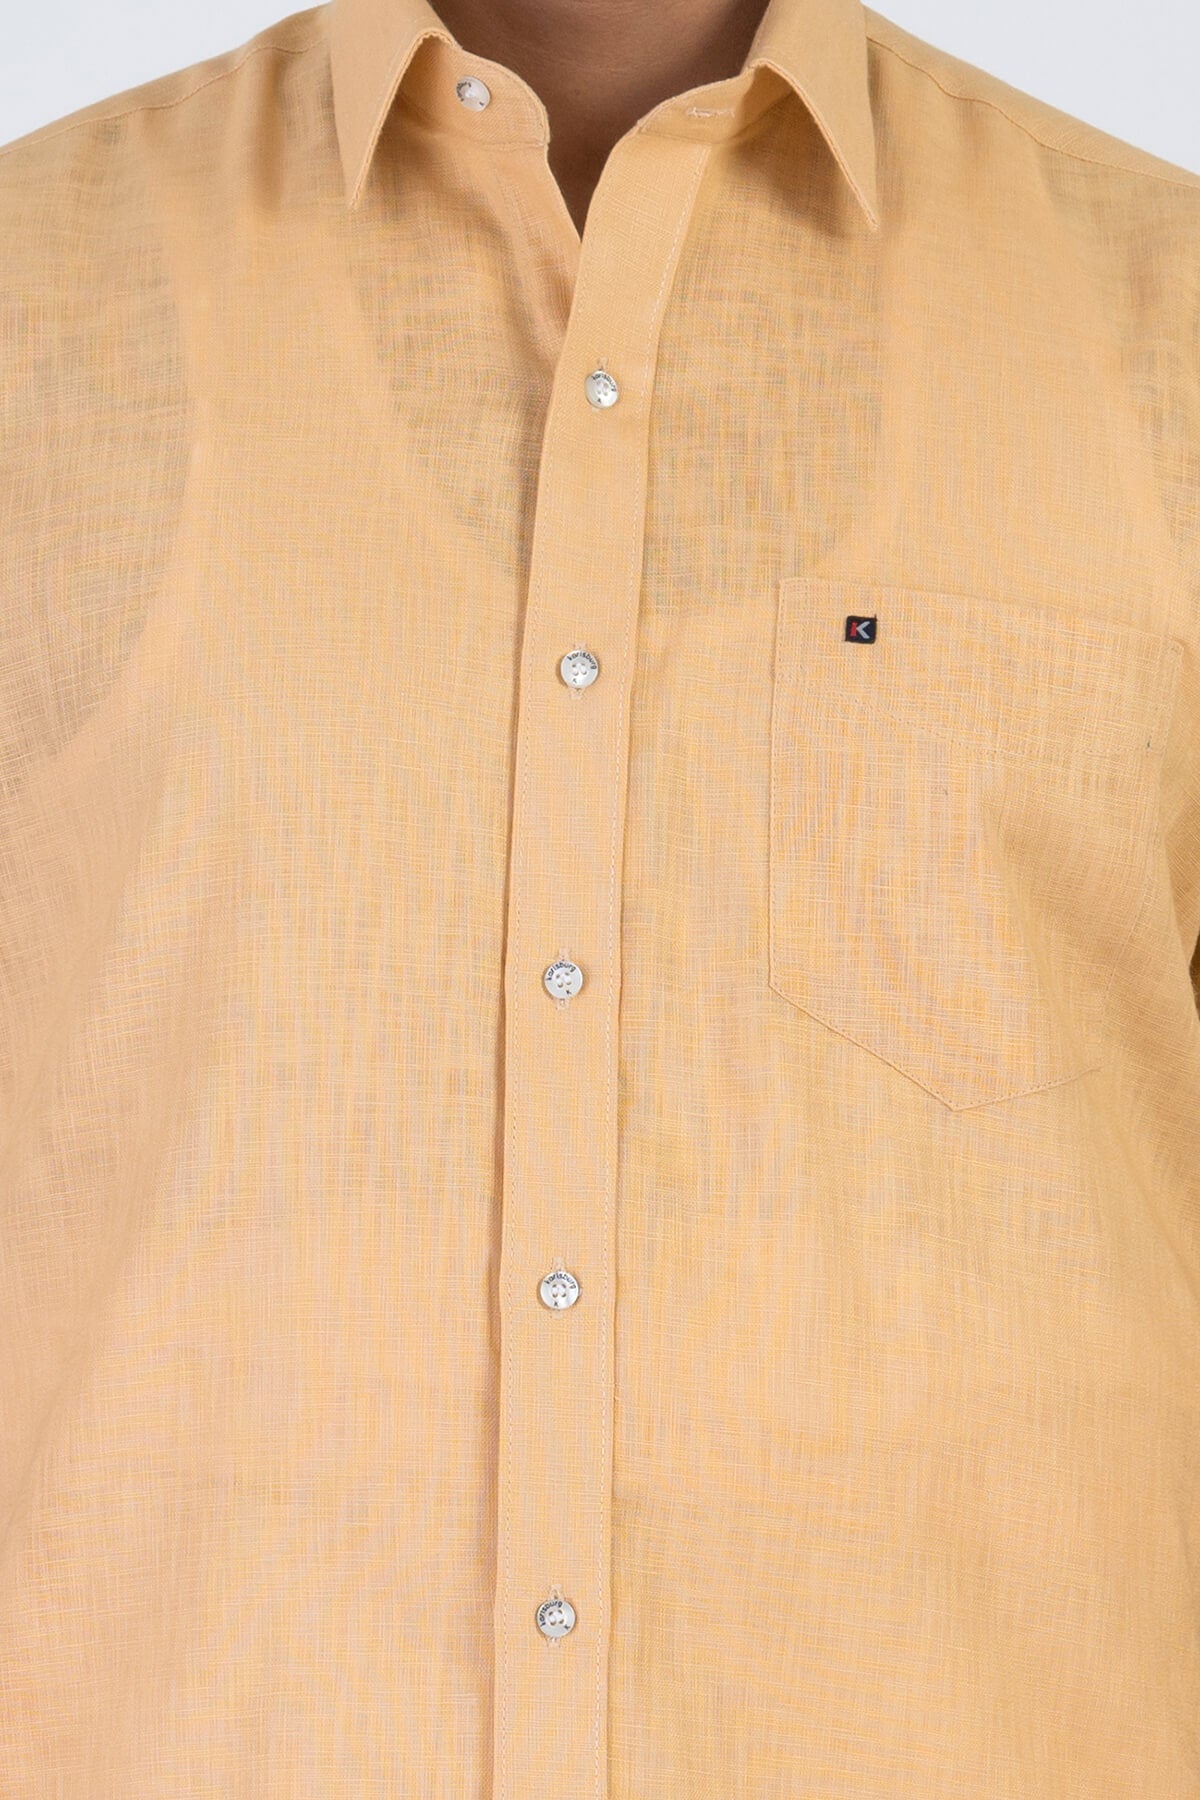 Combo Men's Premium Cotton Dhoti with Sandle Shirt